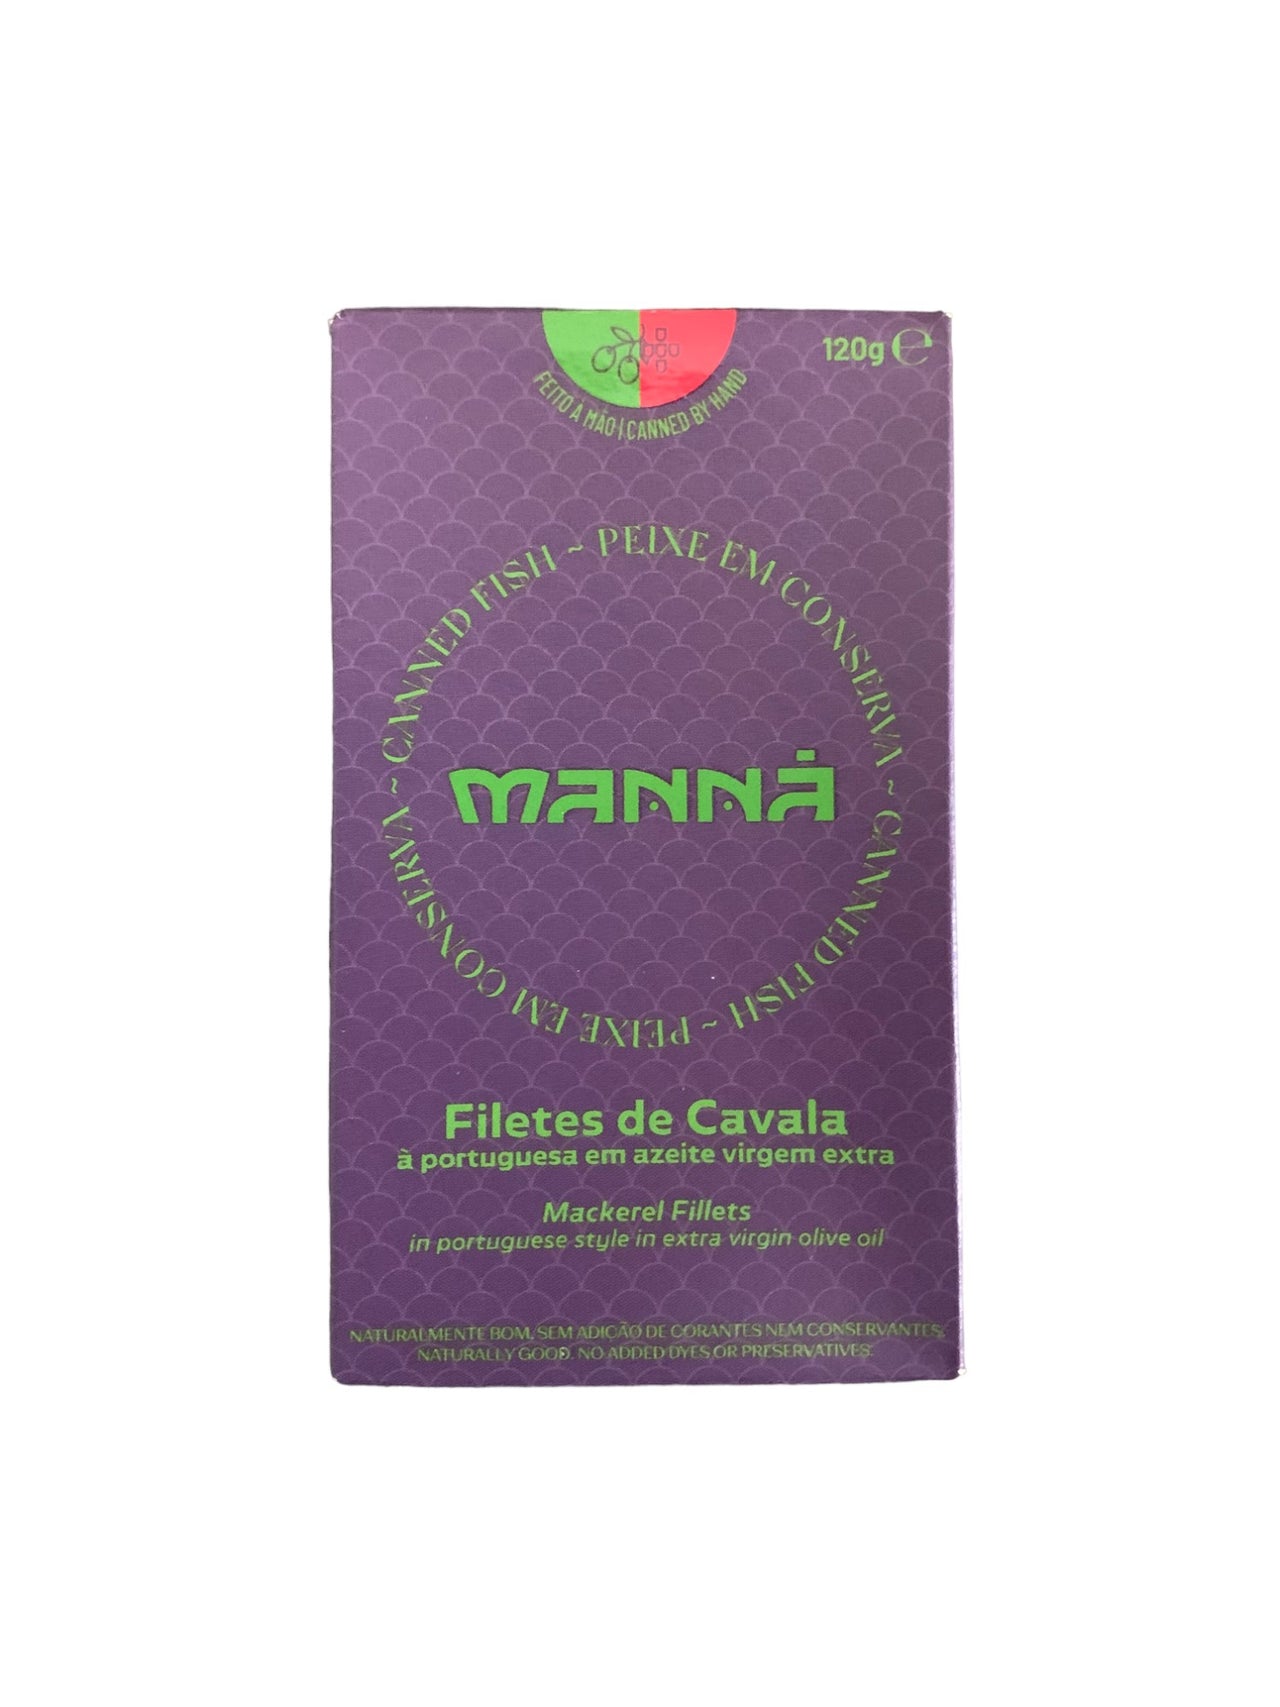 Manná Mackerel Fillets Portuguese Style in Extra Virgin Olive Oil - 6 Pack